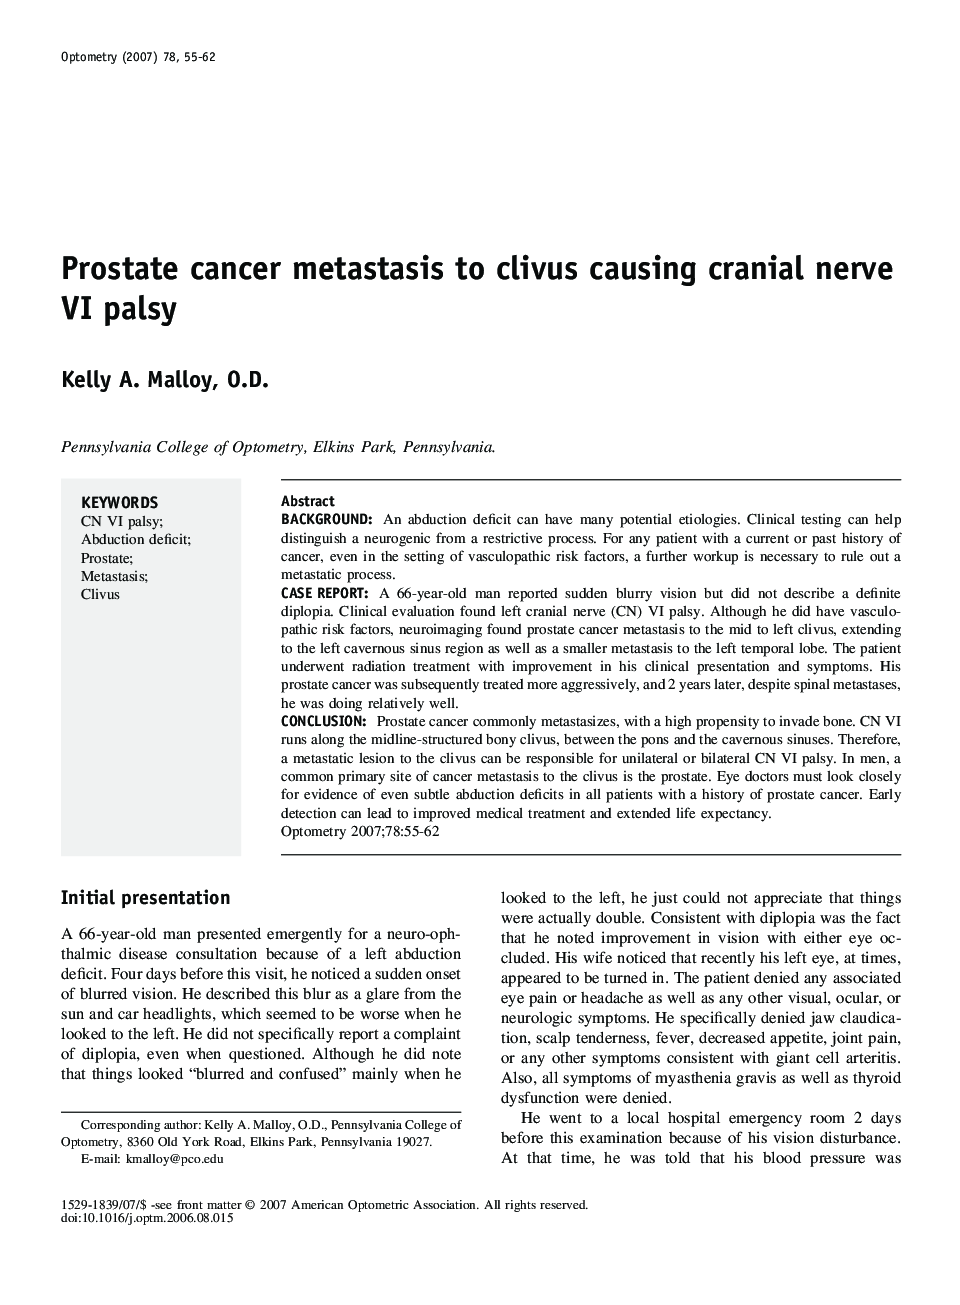 Prostate cancer metastasis to clivus causing cranial nerve VI palsy